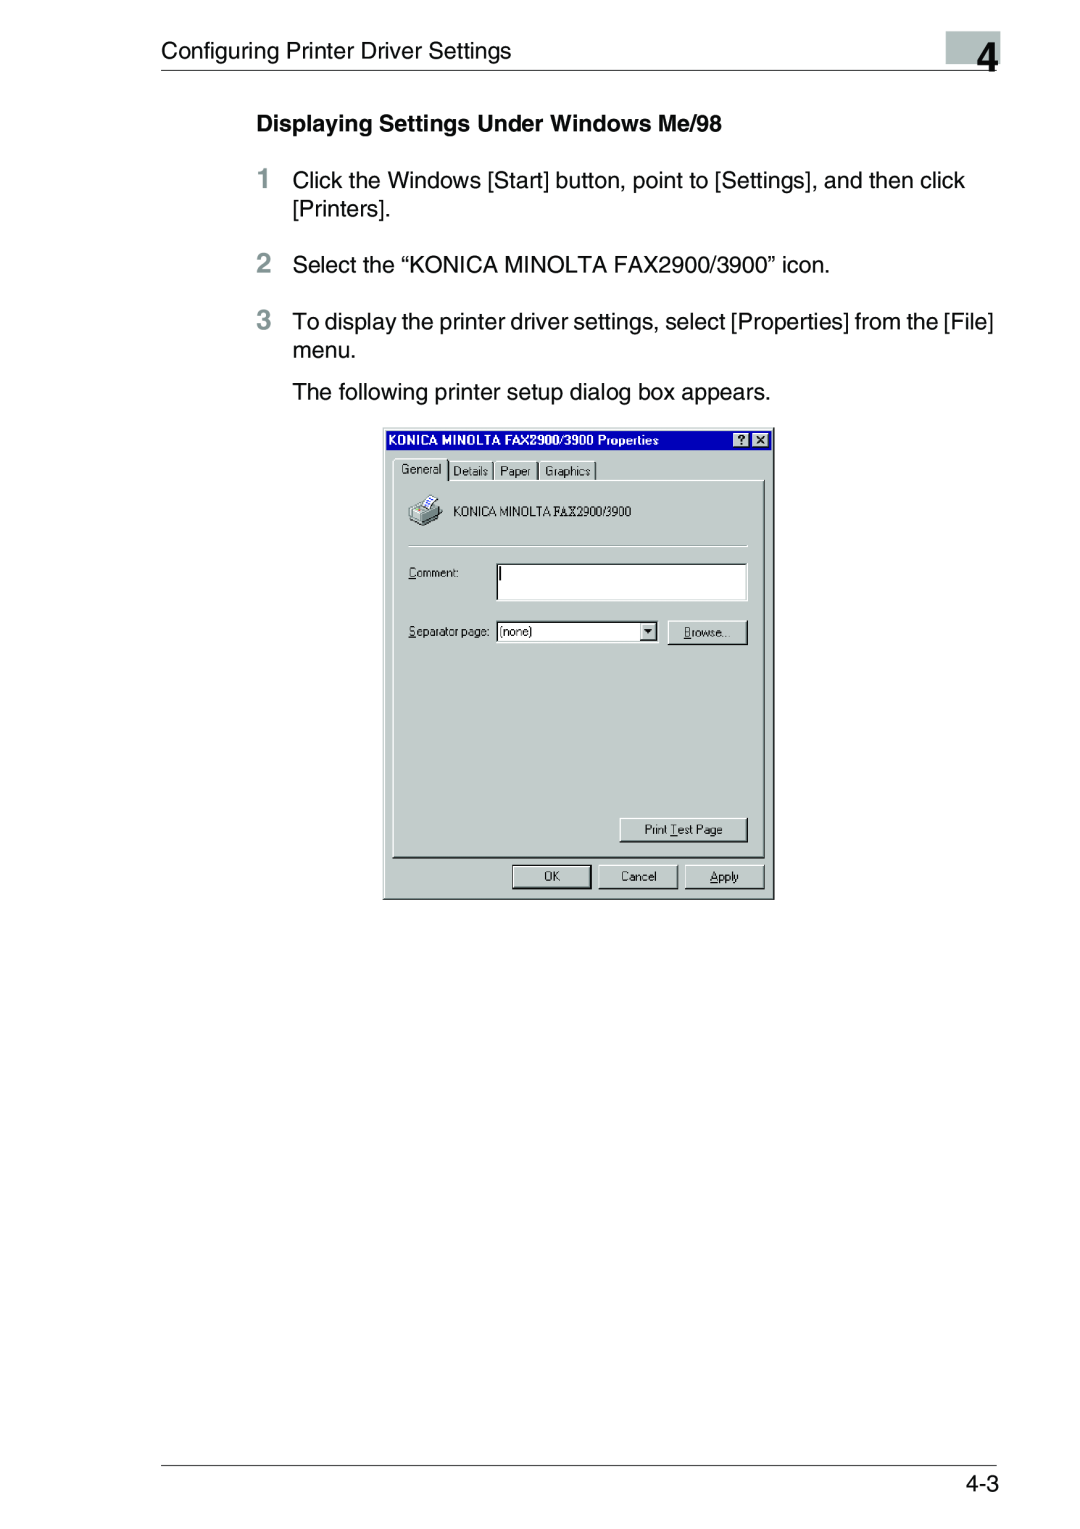 Konica Minolta FAX2900/FAX3900 manual Configuring Printer Driver Settings, Displaying Settings Under Windows Me/98 